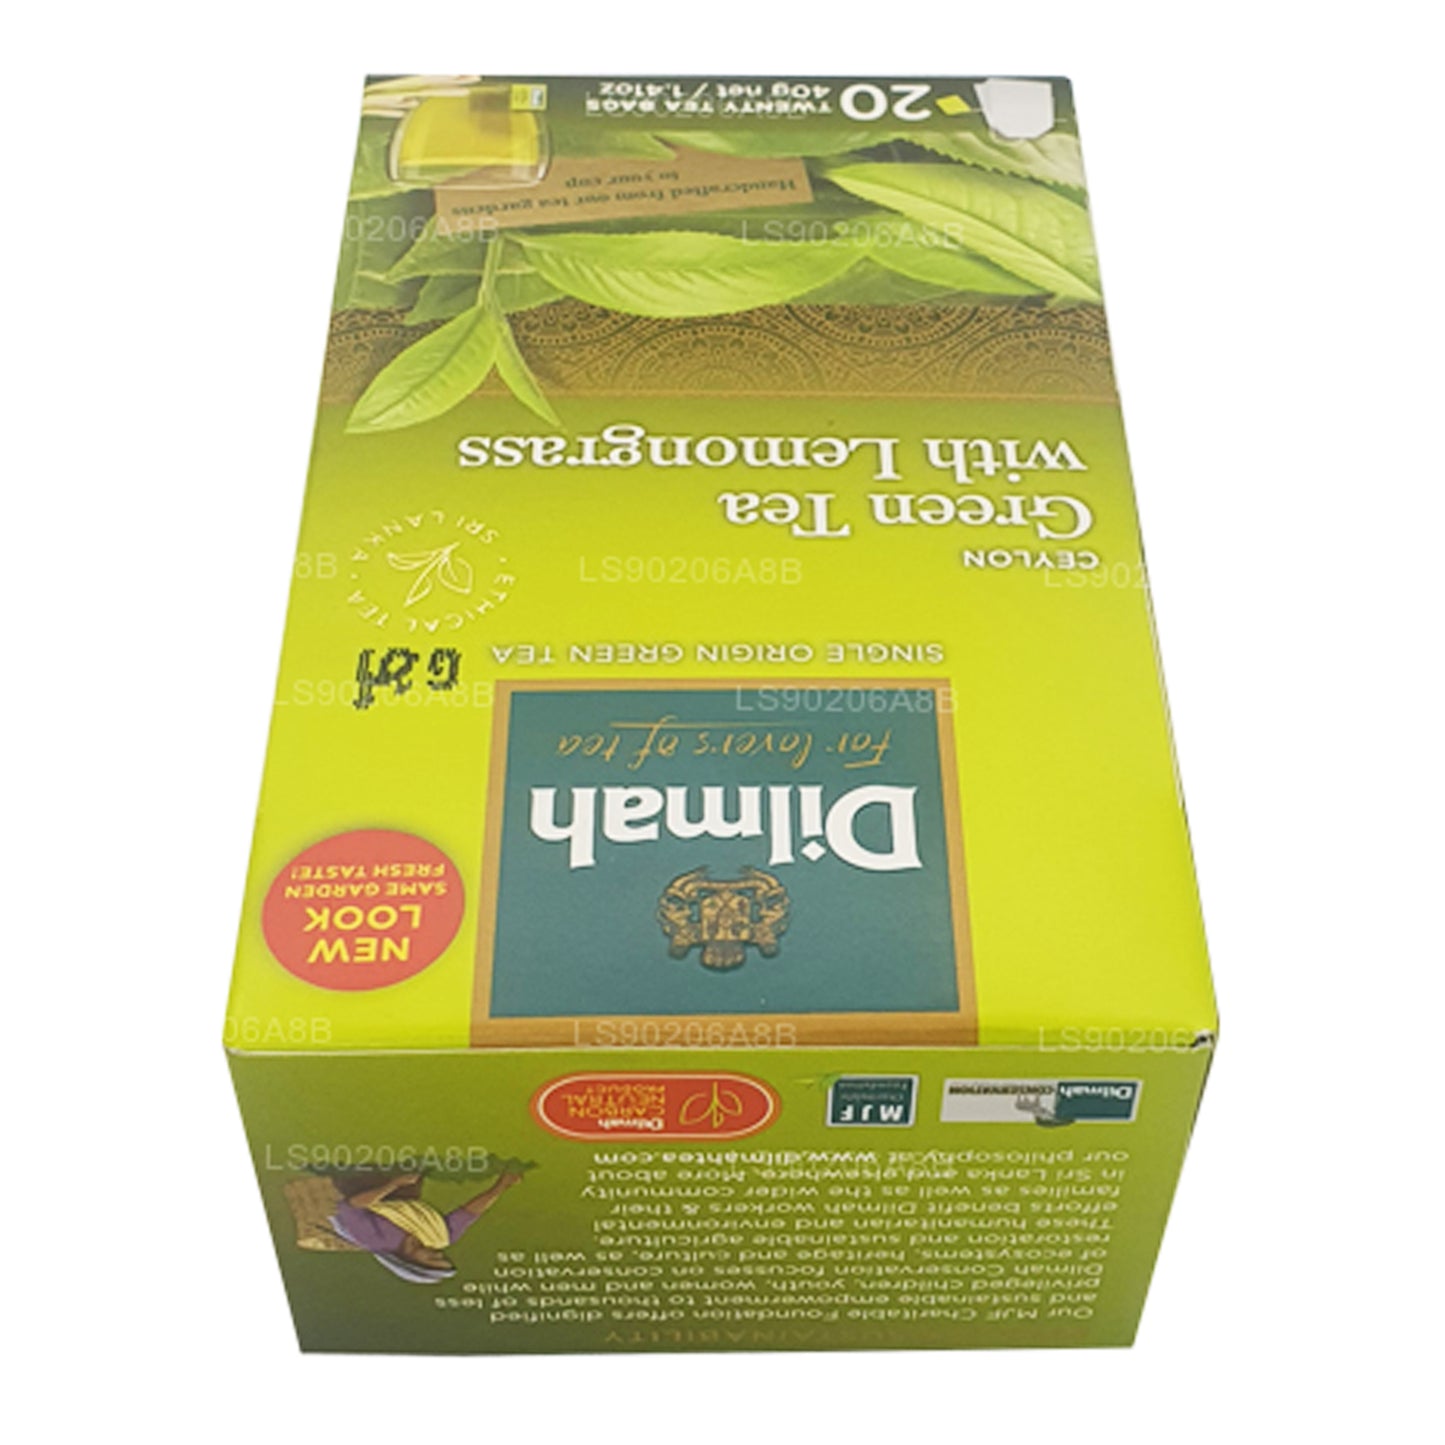 Dilmah Saf Seylan Yeşil Çay Limon Çayı (40g) 20 Çay Poşeti